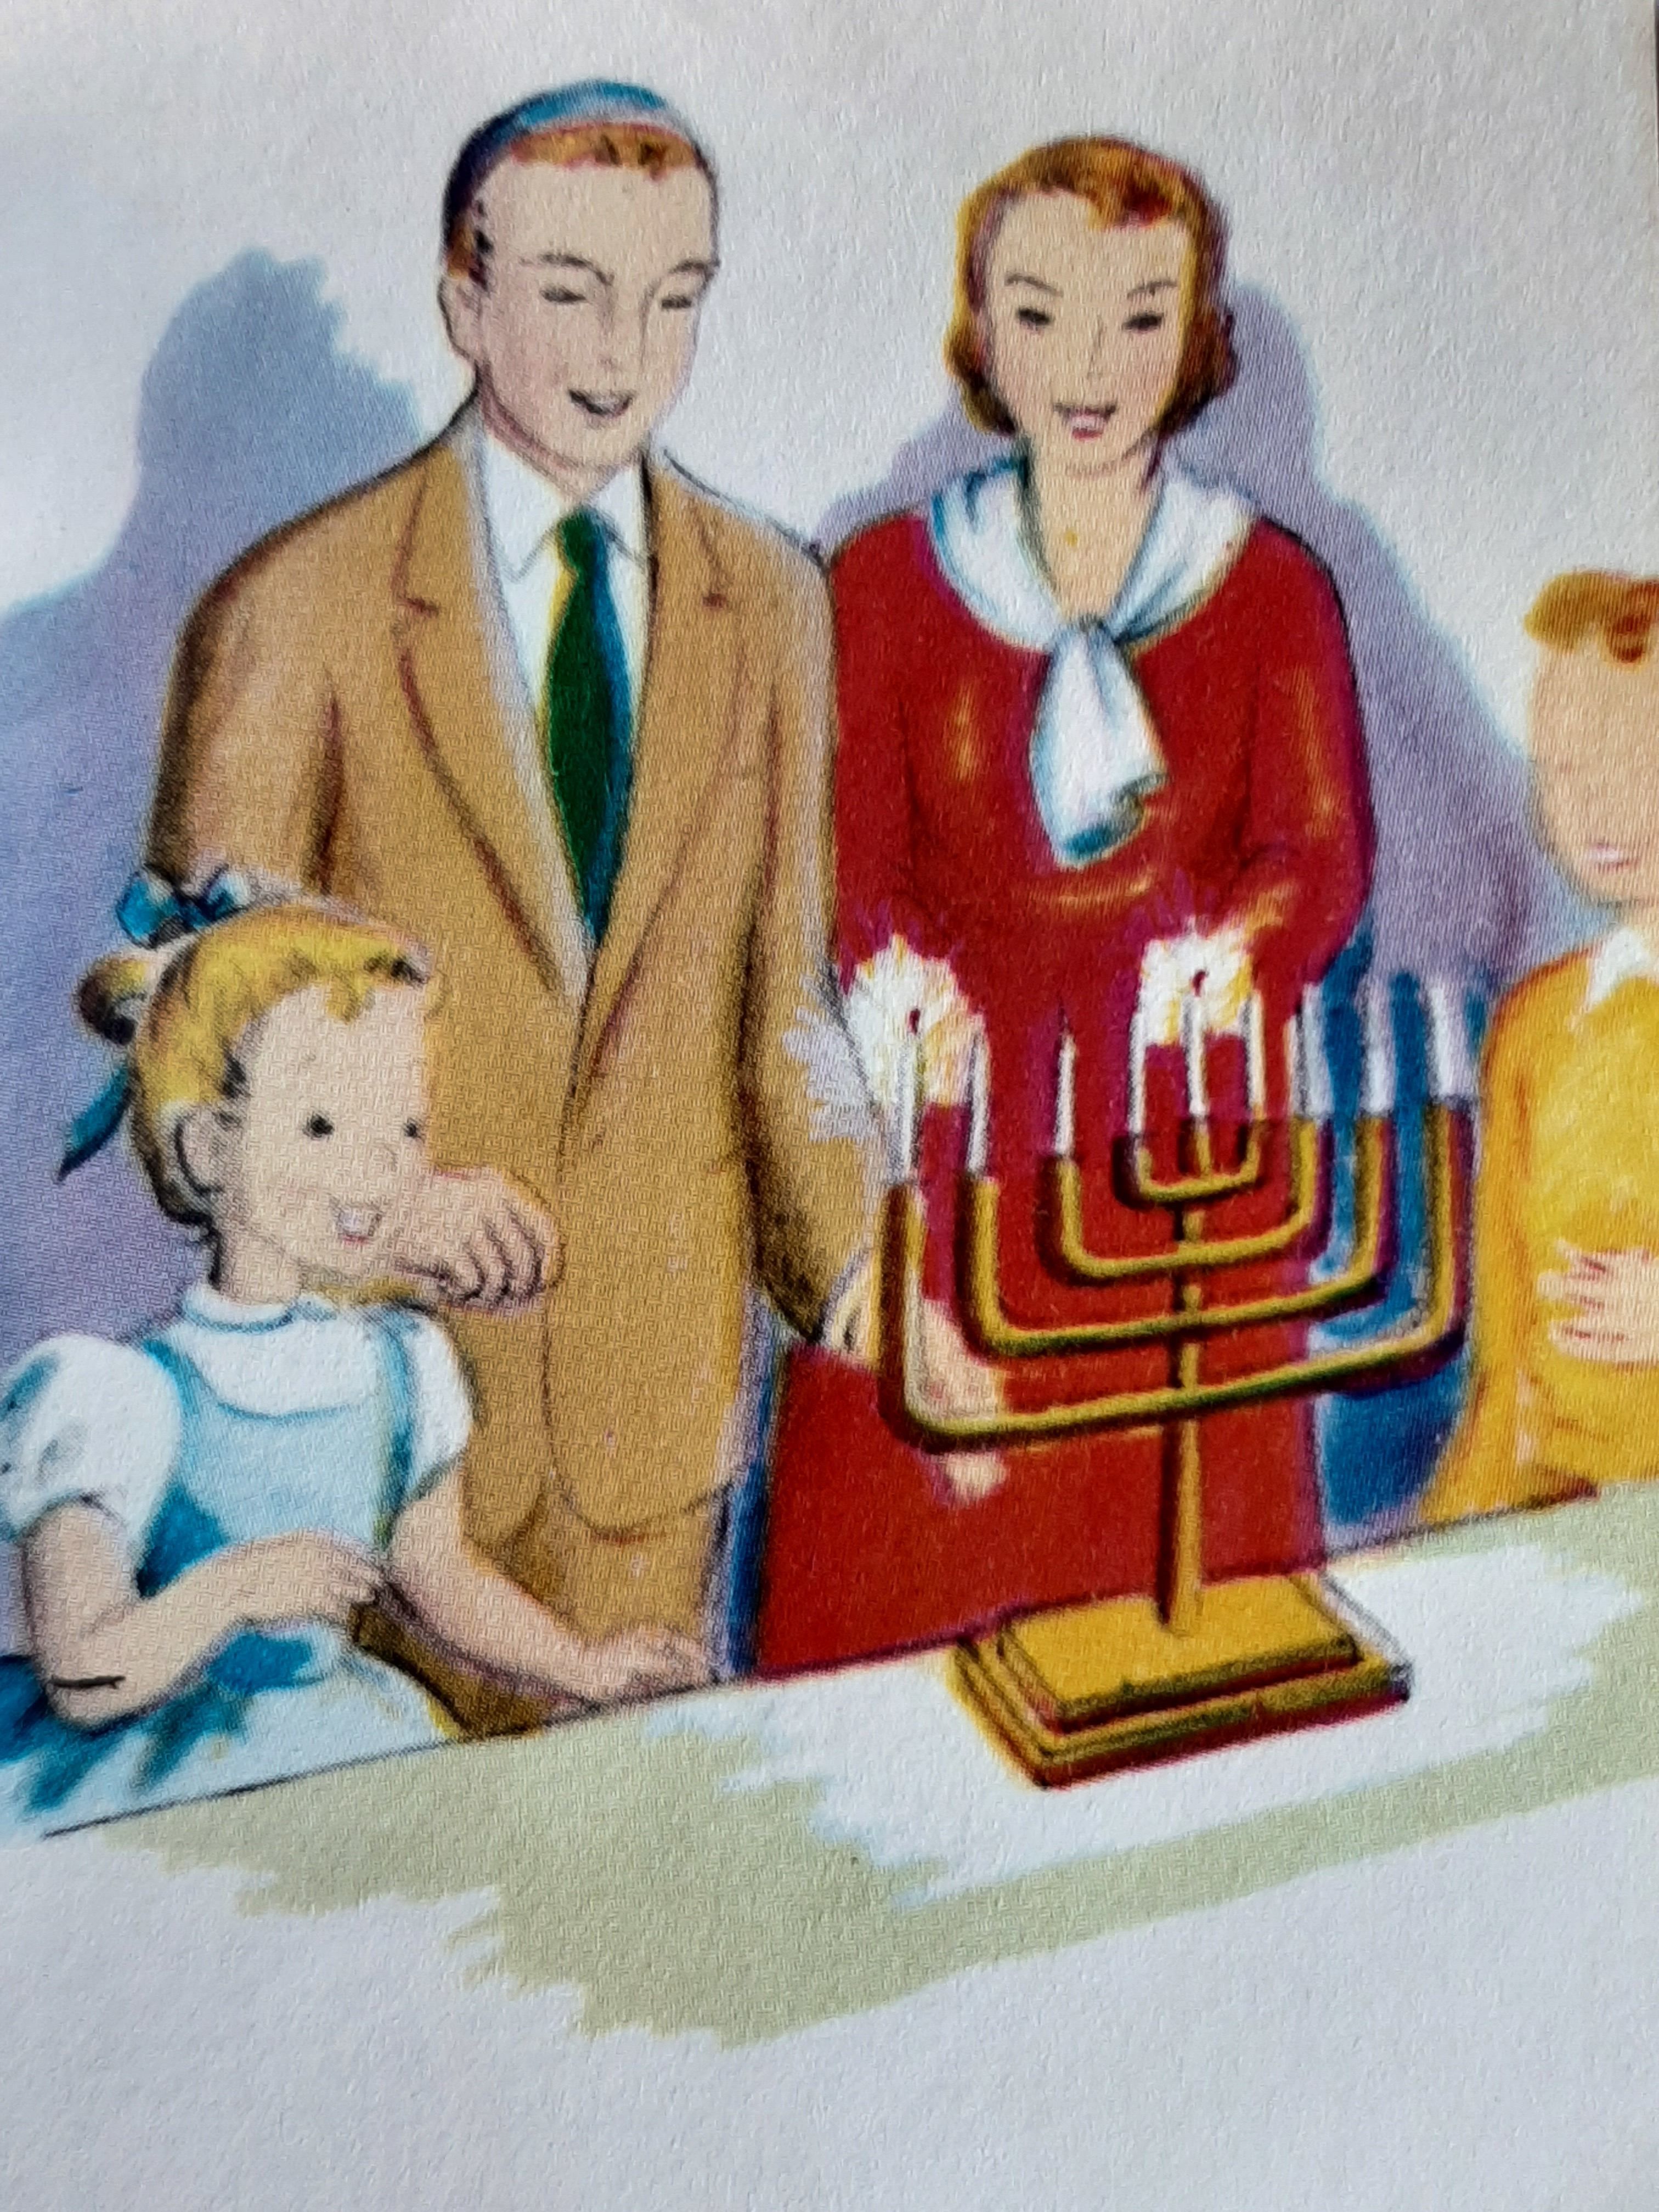 1950's illustration of a family lighting a menorah.